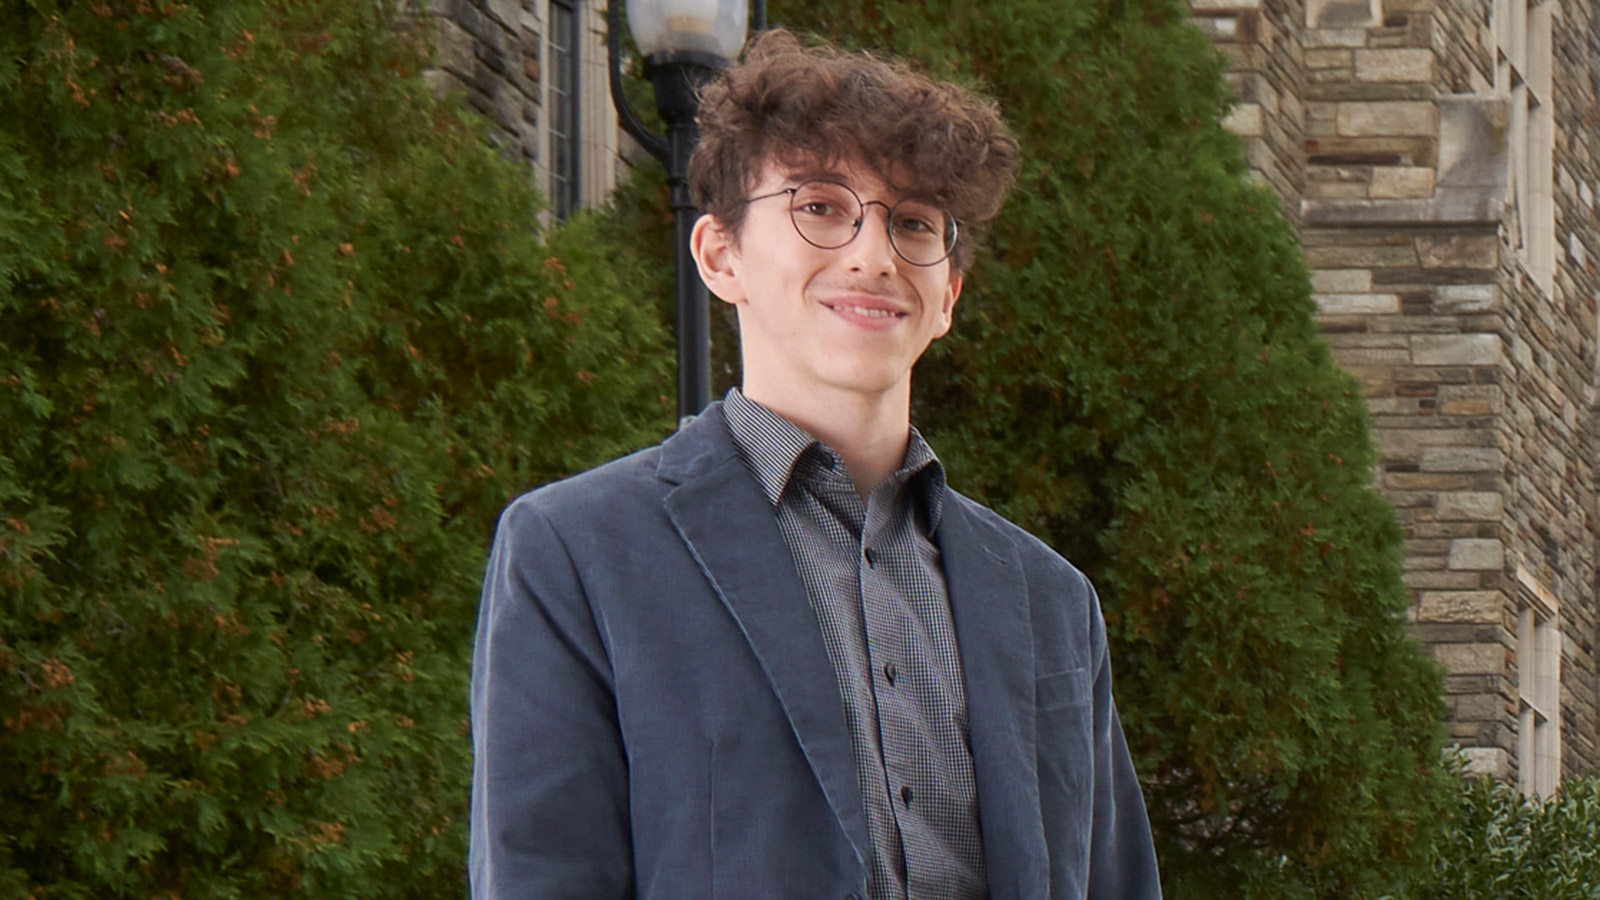 Alex Manduca '22, a physics major at Saint Joseph's University, wearing a suit